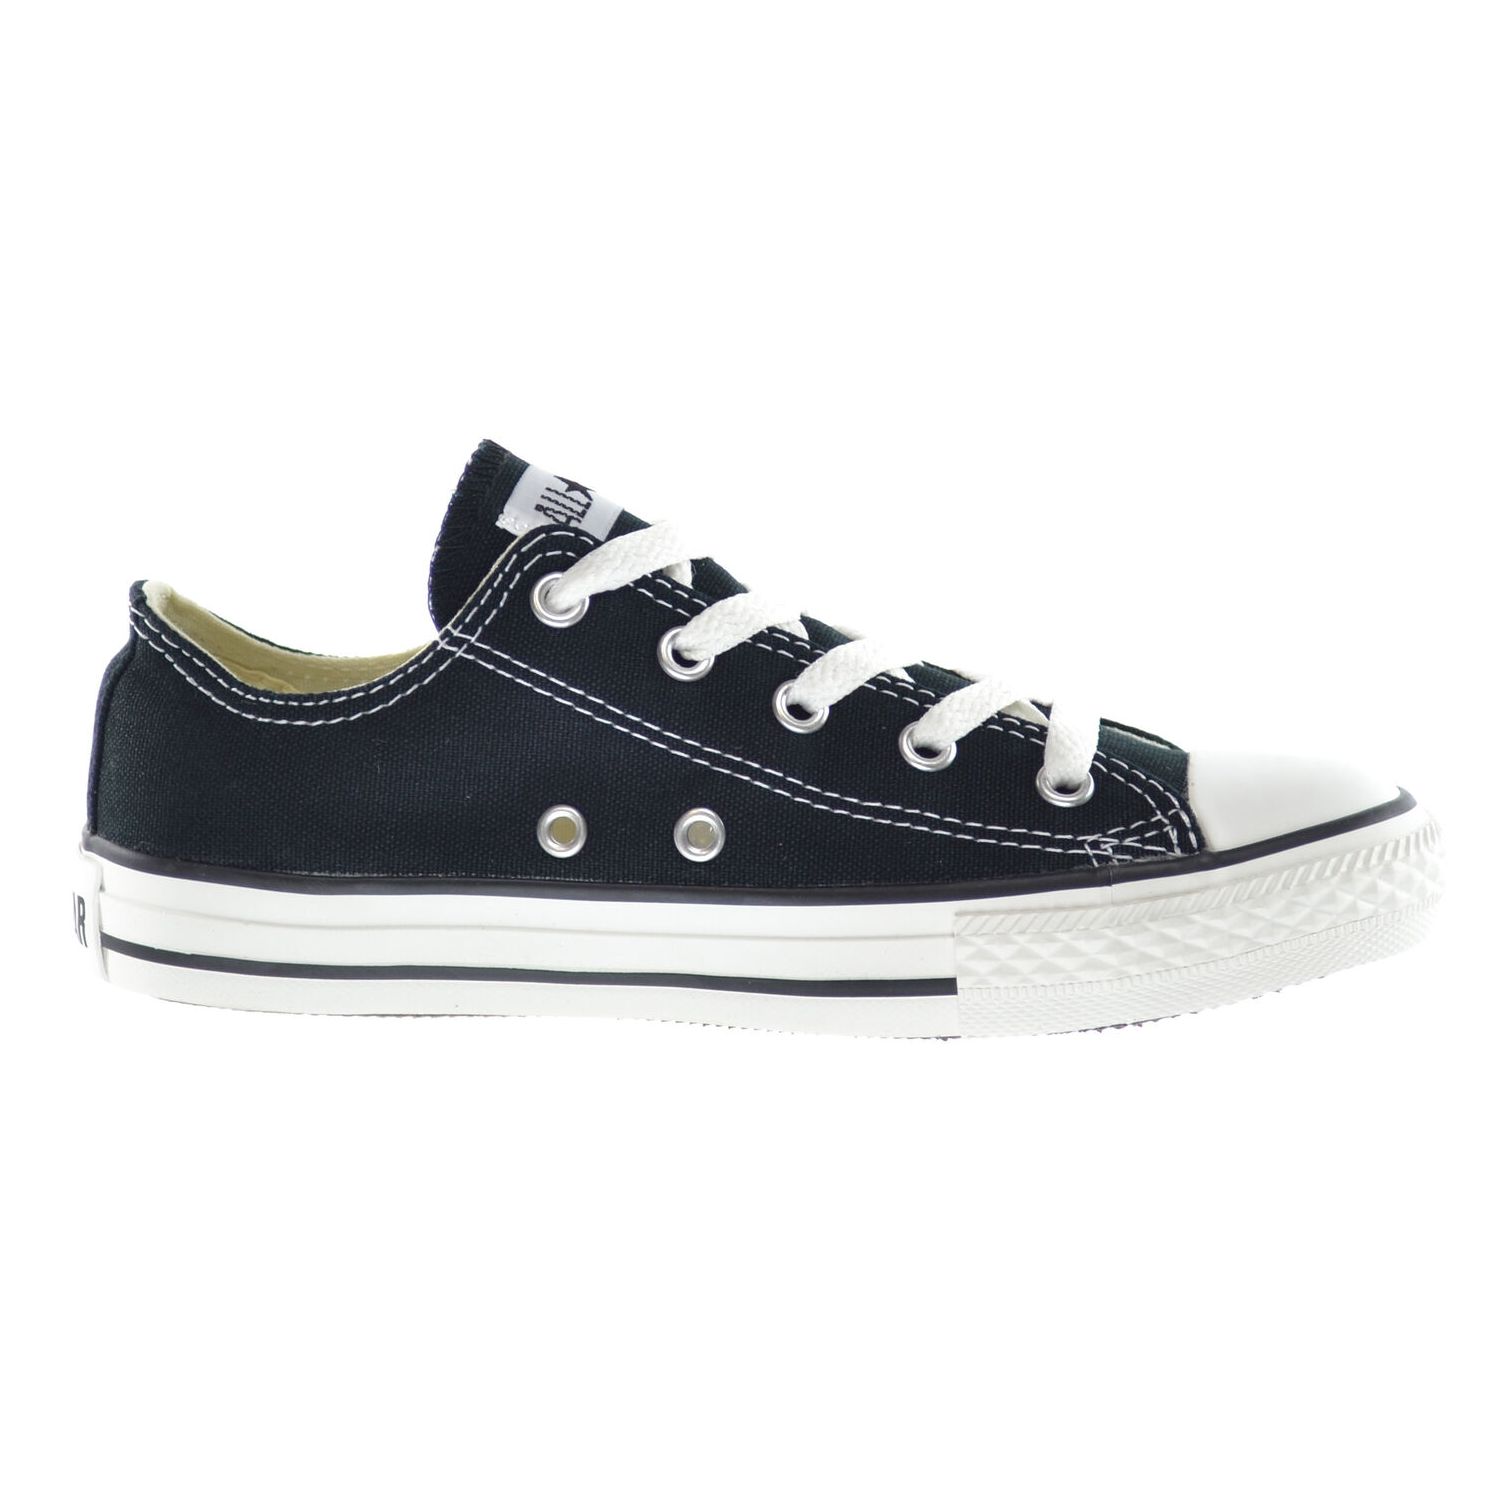 Converse C-T All Star OX Little Kids Fashion Sneakers Black 3J235 | eBay